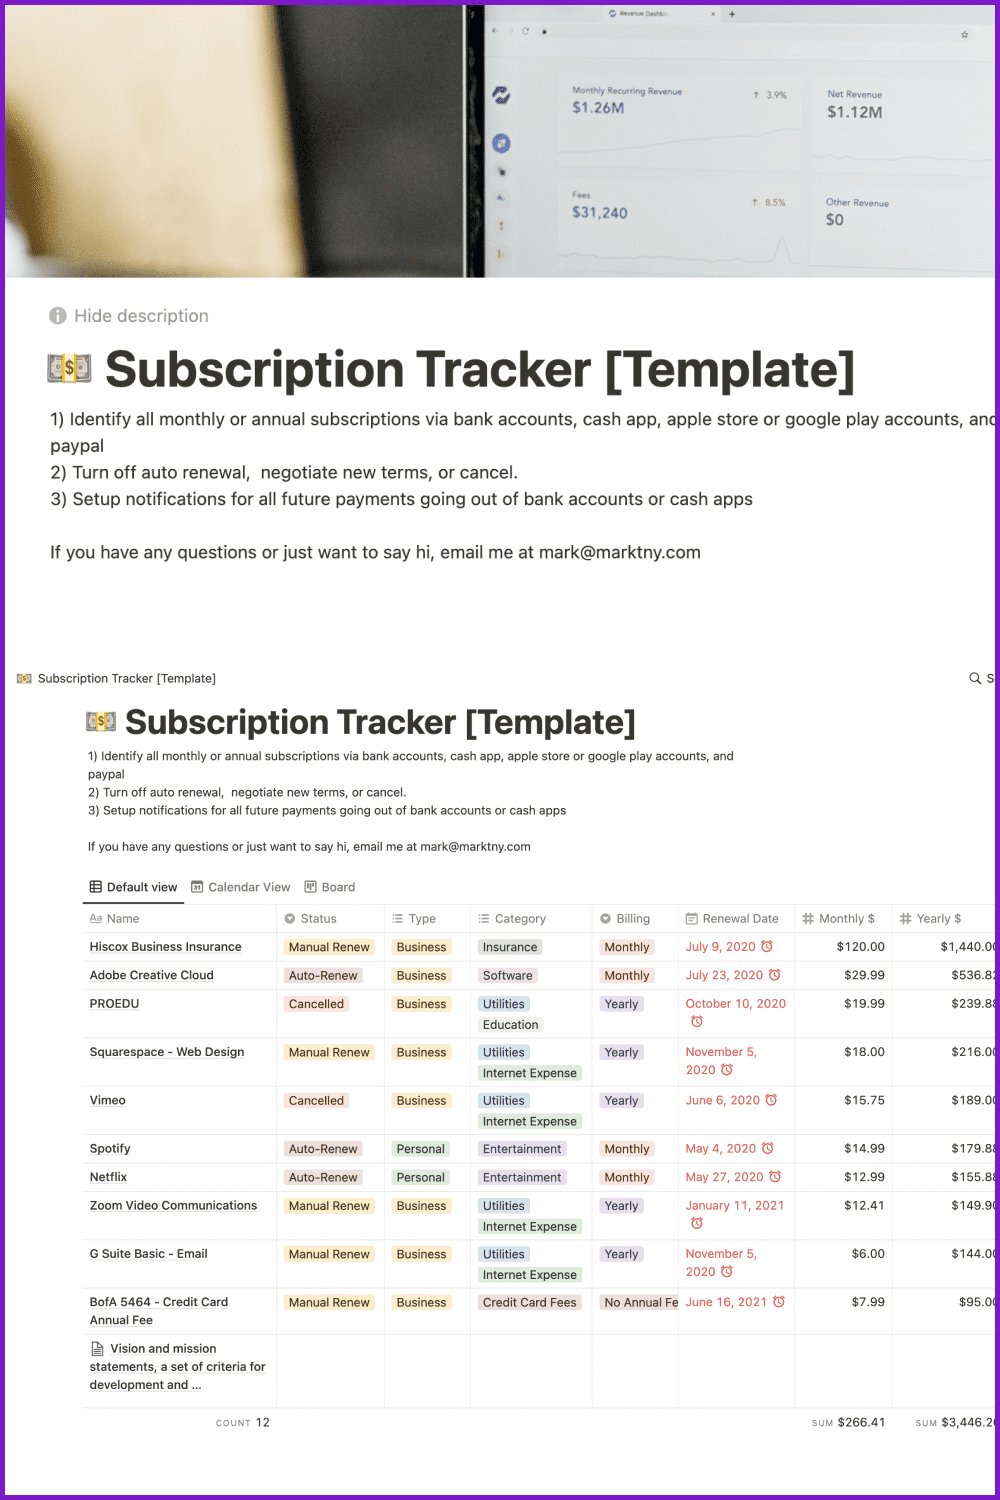 Subscription Tracker.